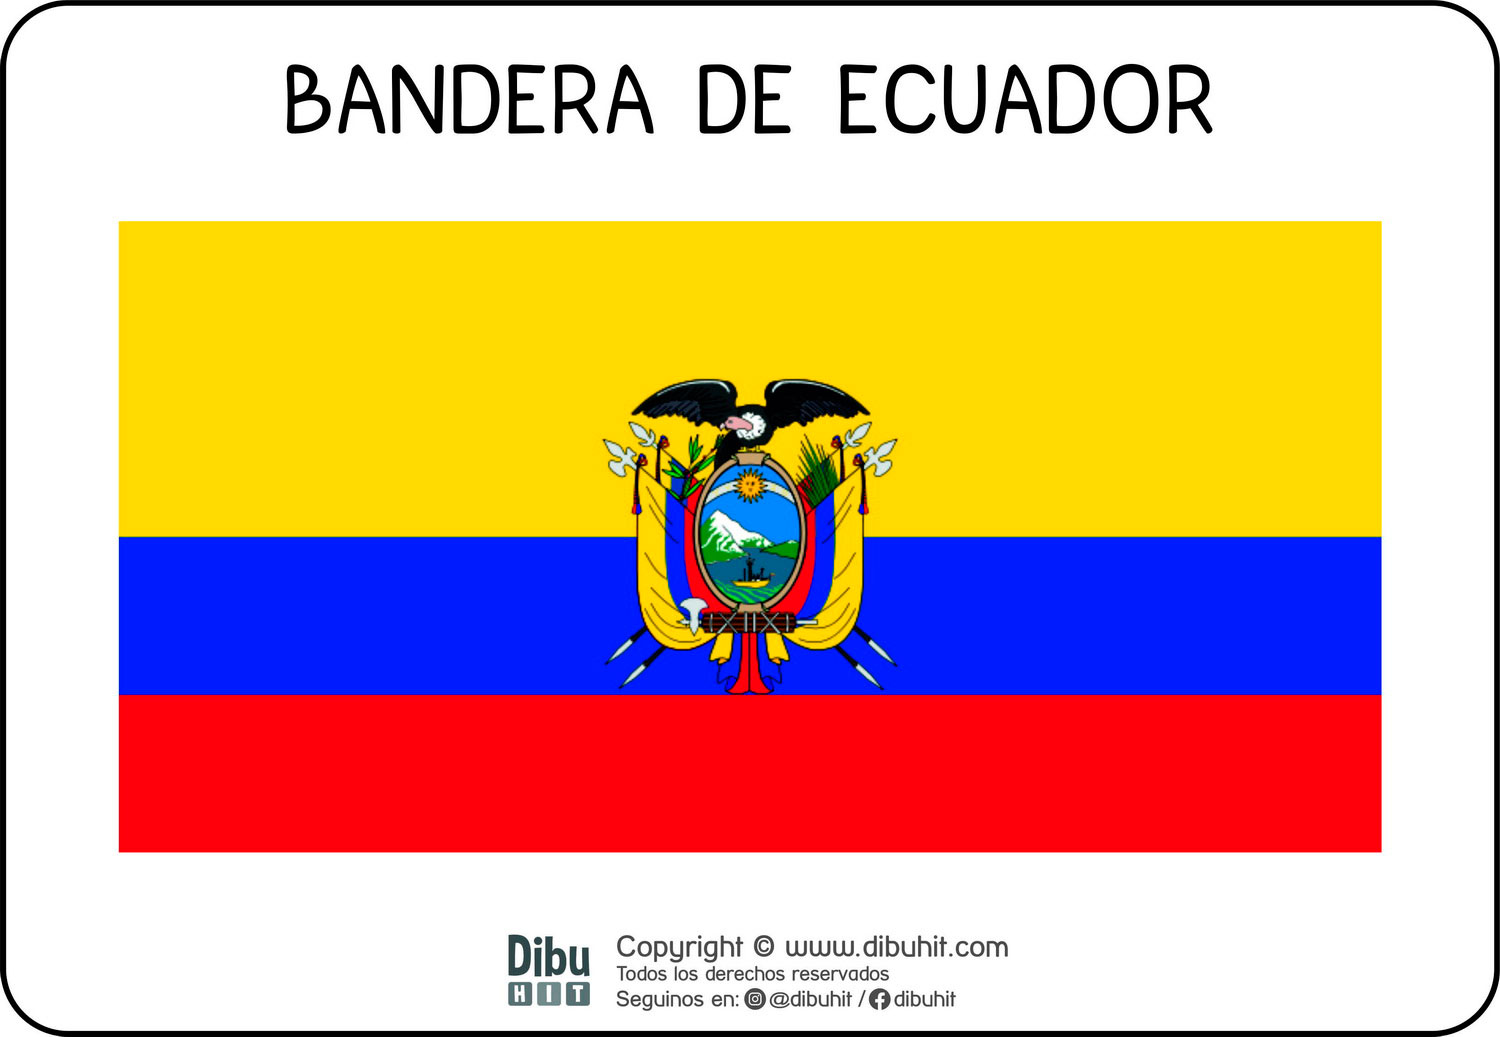 Lamina didactica bandera de Ecuador a colores